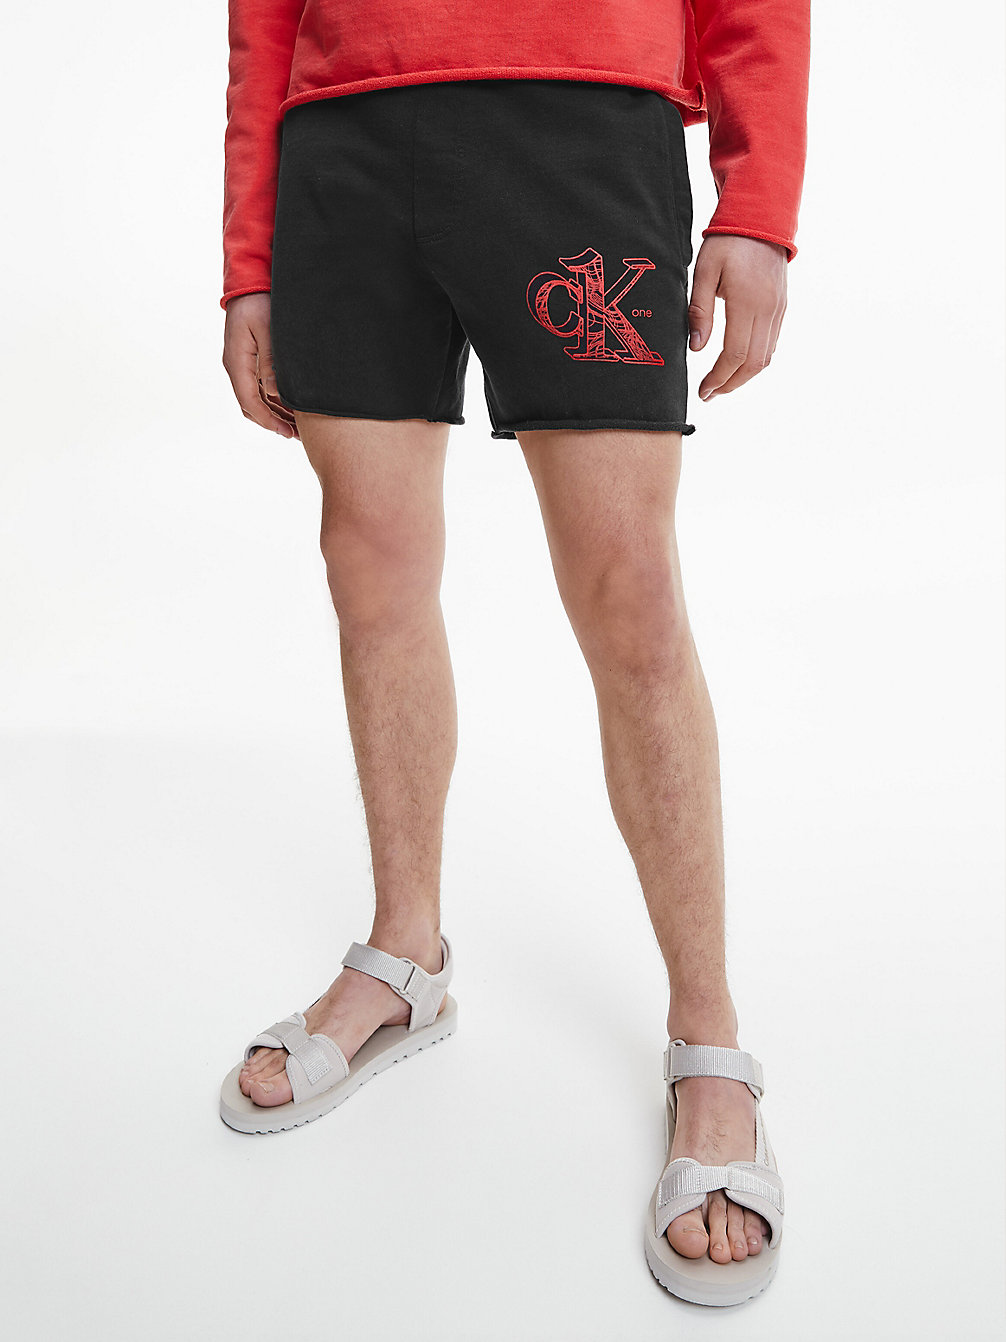 CK BLACK Pantaloncini In Cotone Riciclato Unisex - CK One undefined unisex Calvin Klein